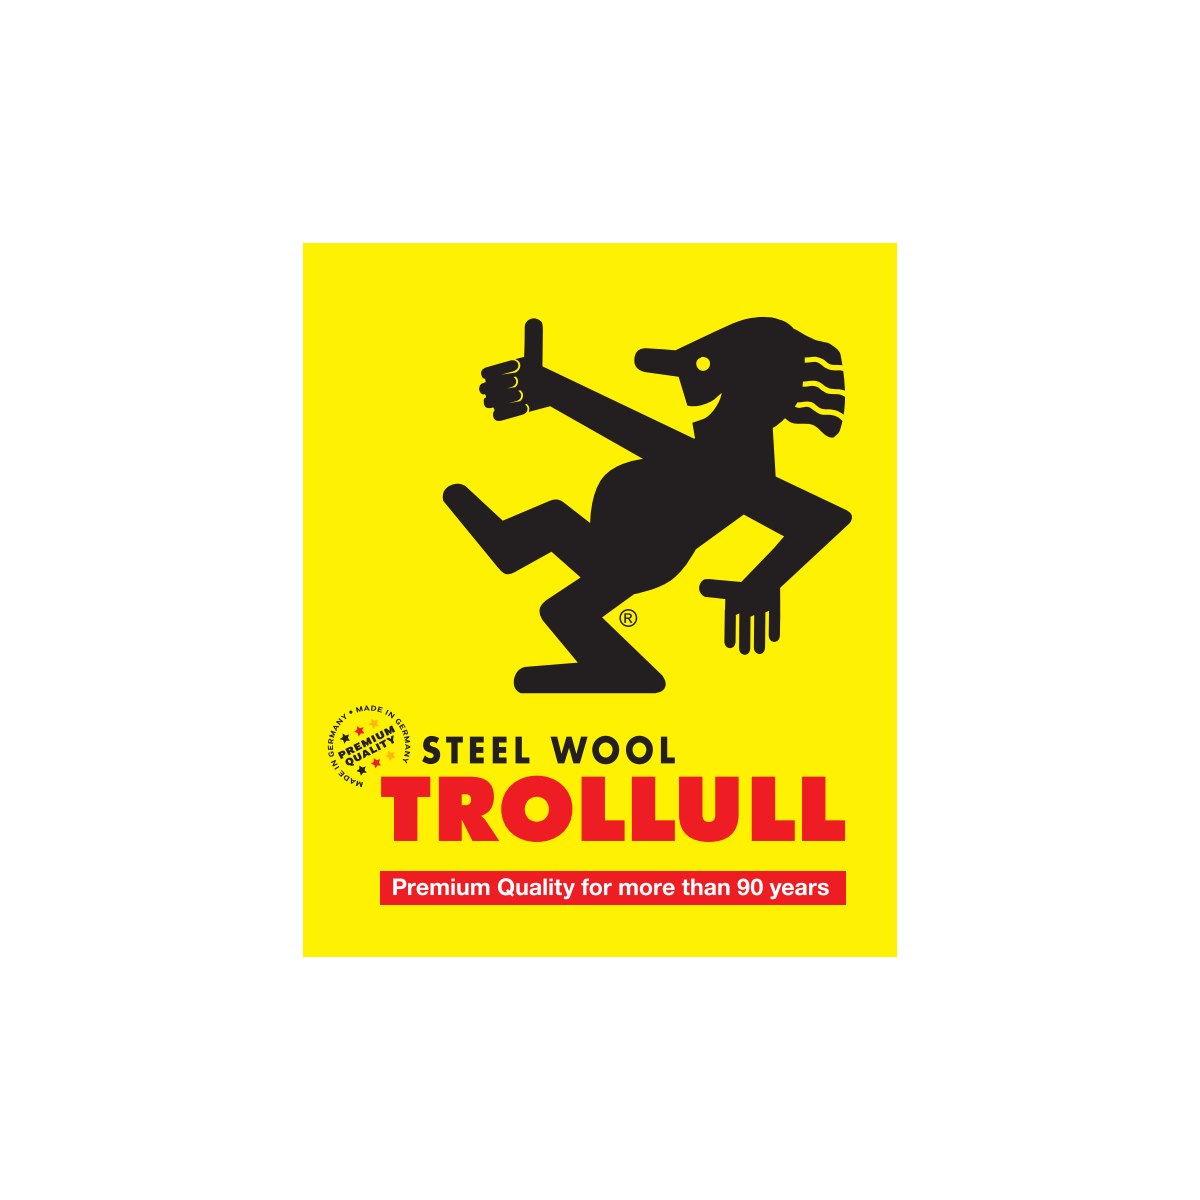 Where to Buy Trollull Steel Wool